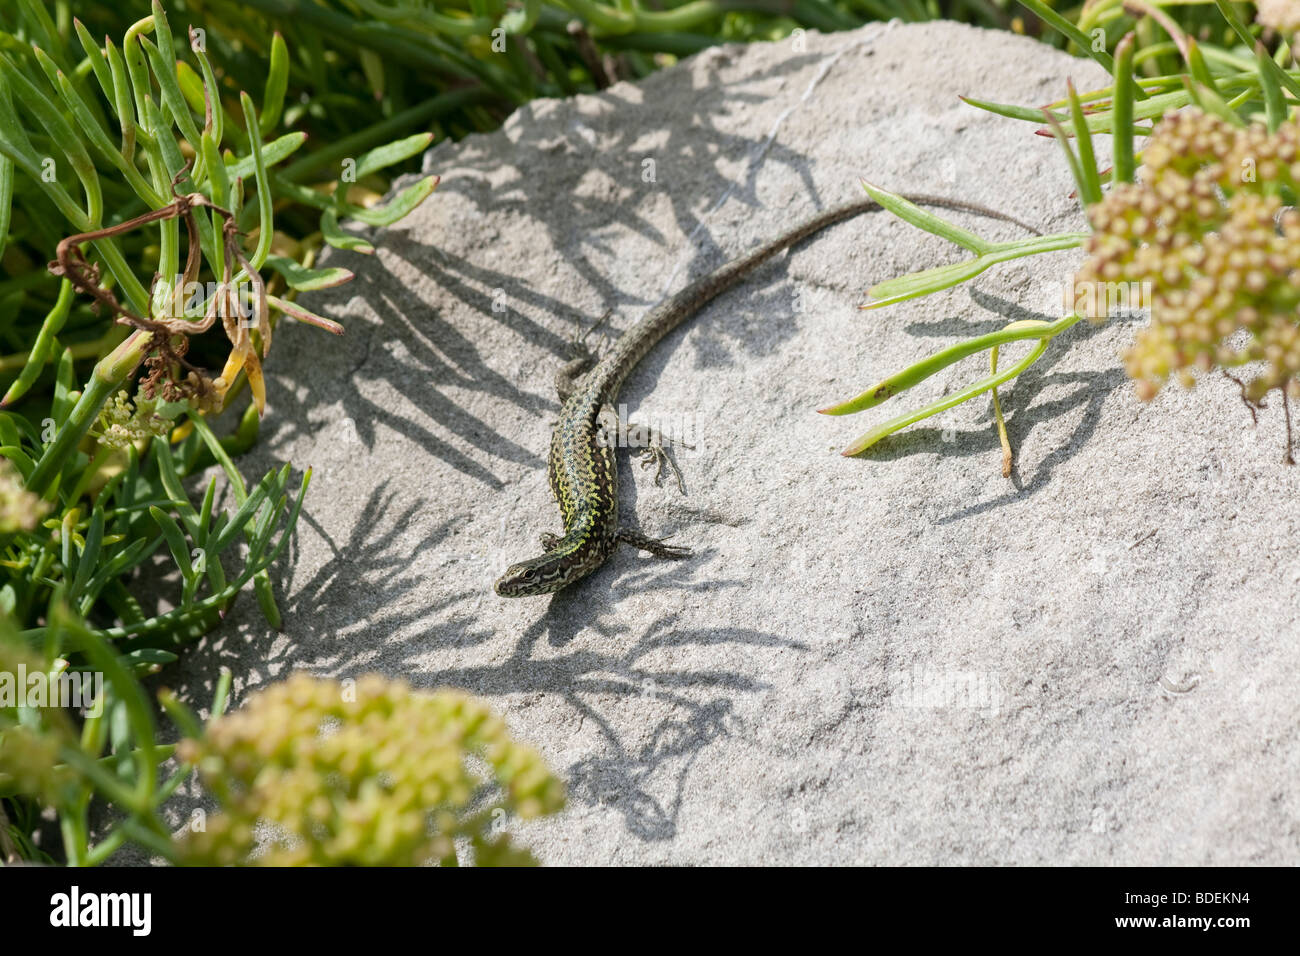 Wall lizard (Podarcis muralis) sunbathing on rocks. Dorset, UK. Stock Photo